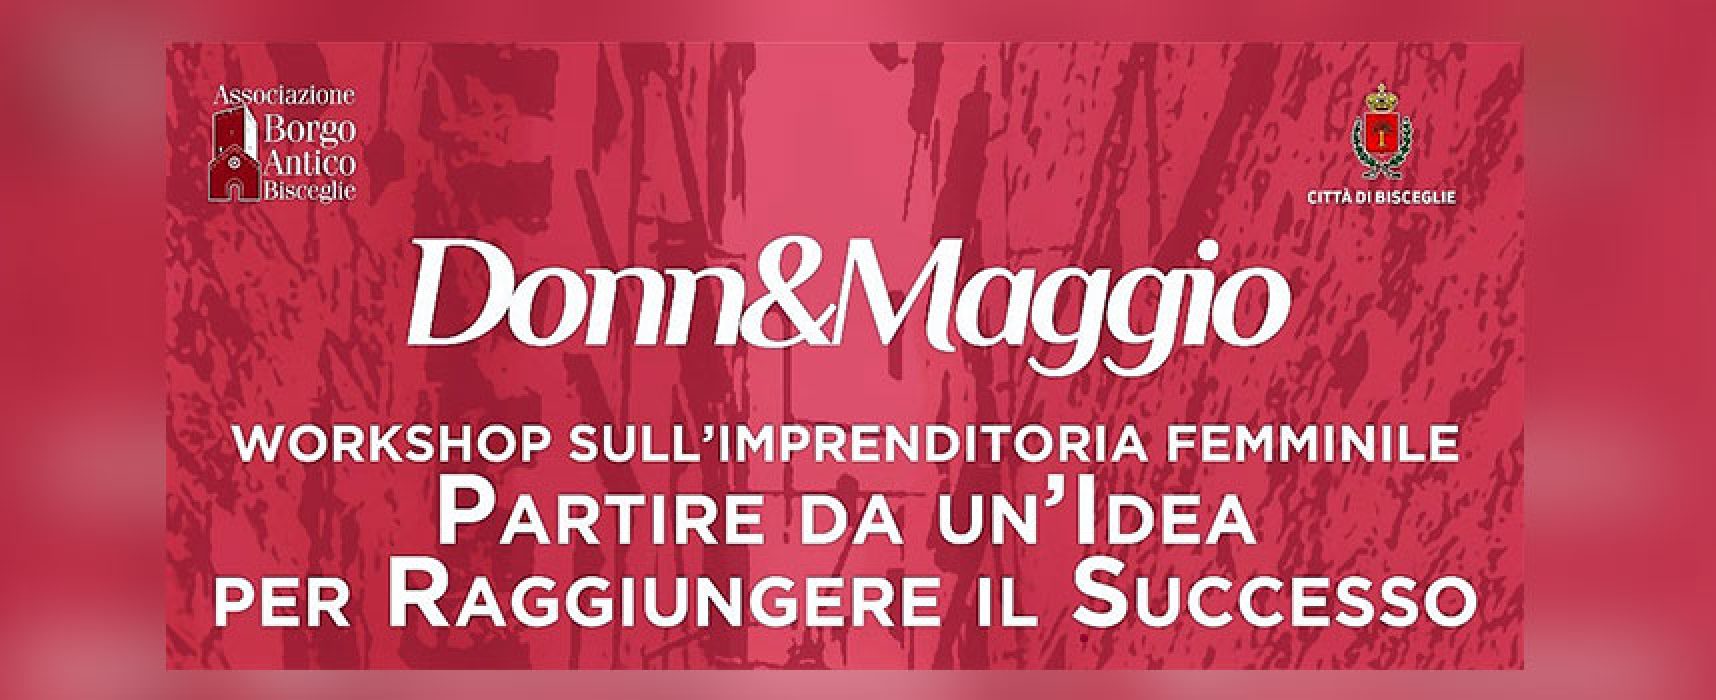 Donn&Maggio: workshop su imprenditoria femminile a Bisceglie